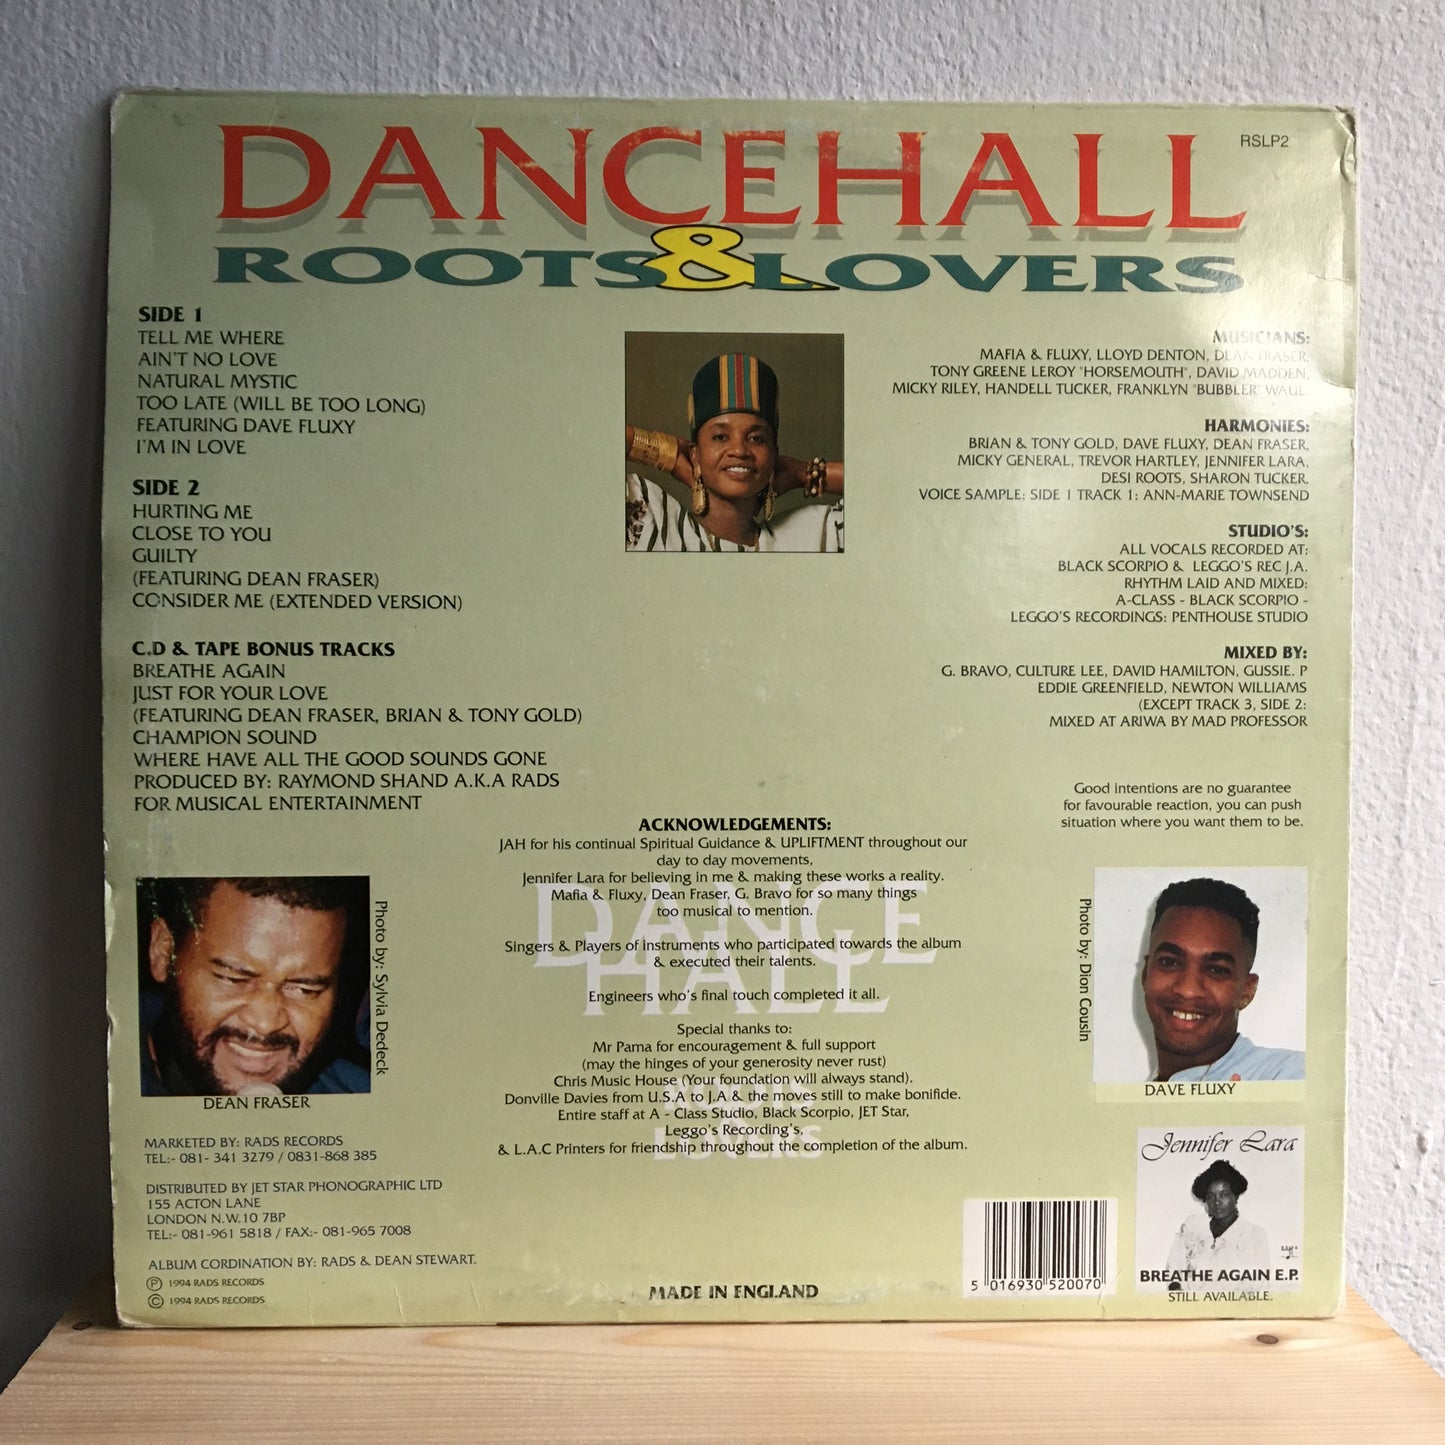 Jennifer Lara – Dancehall Roots & Lovers